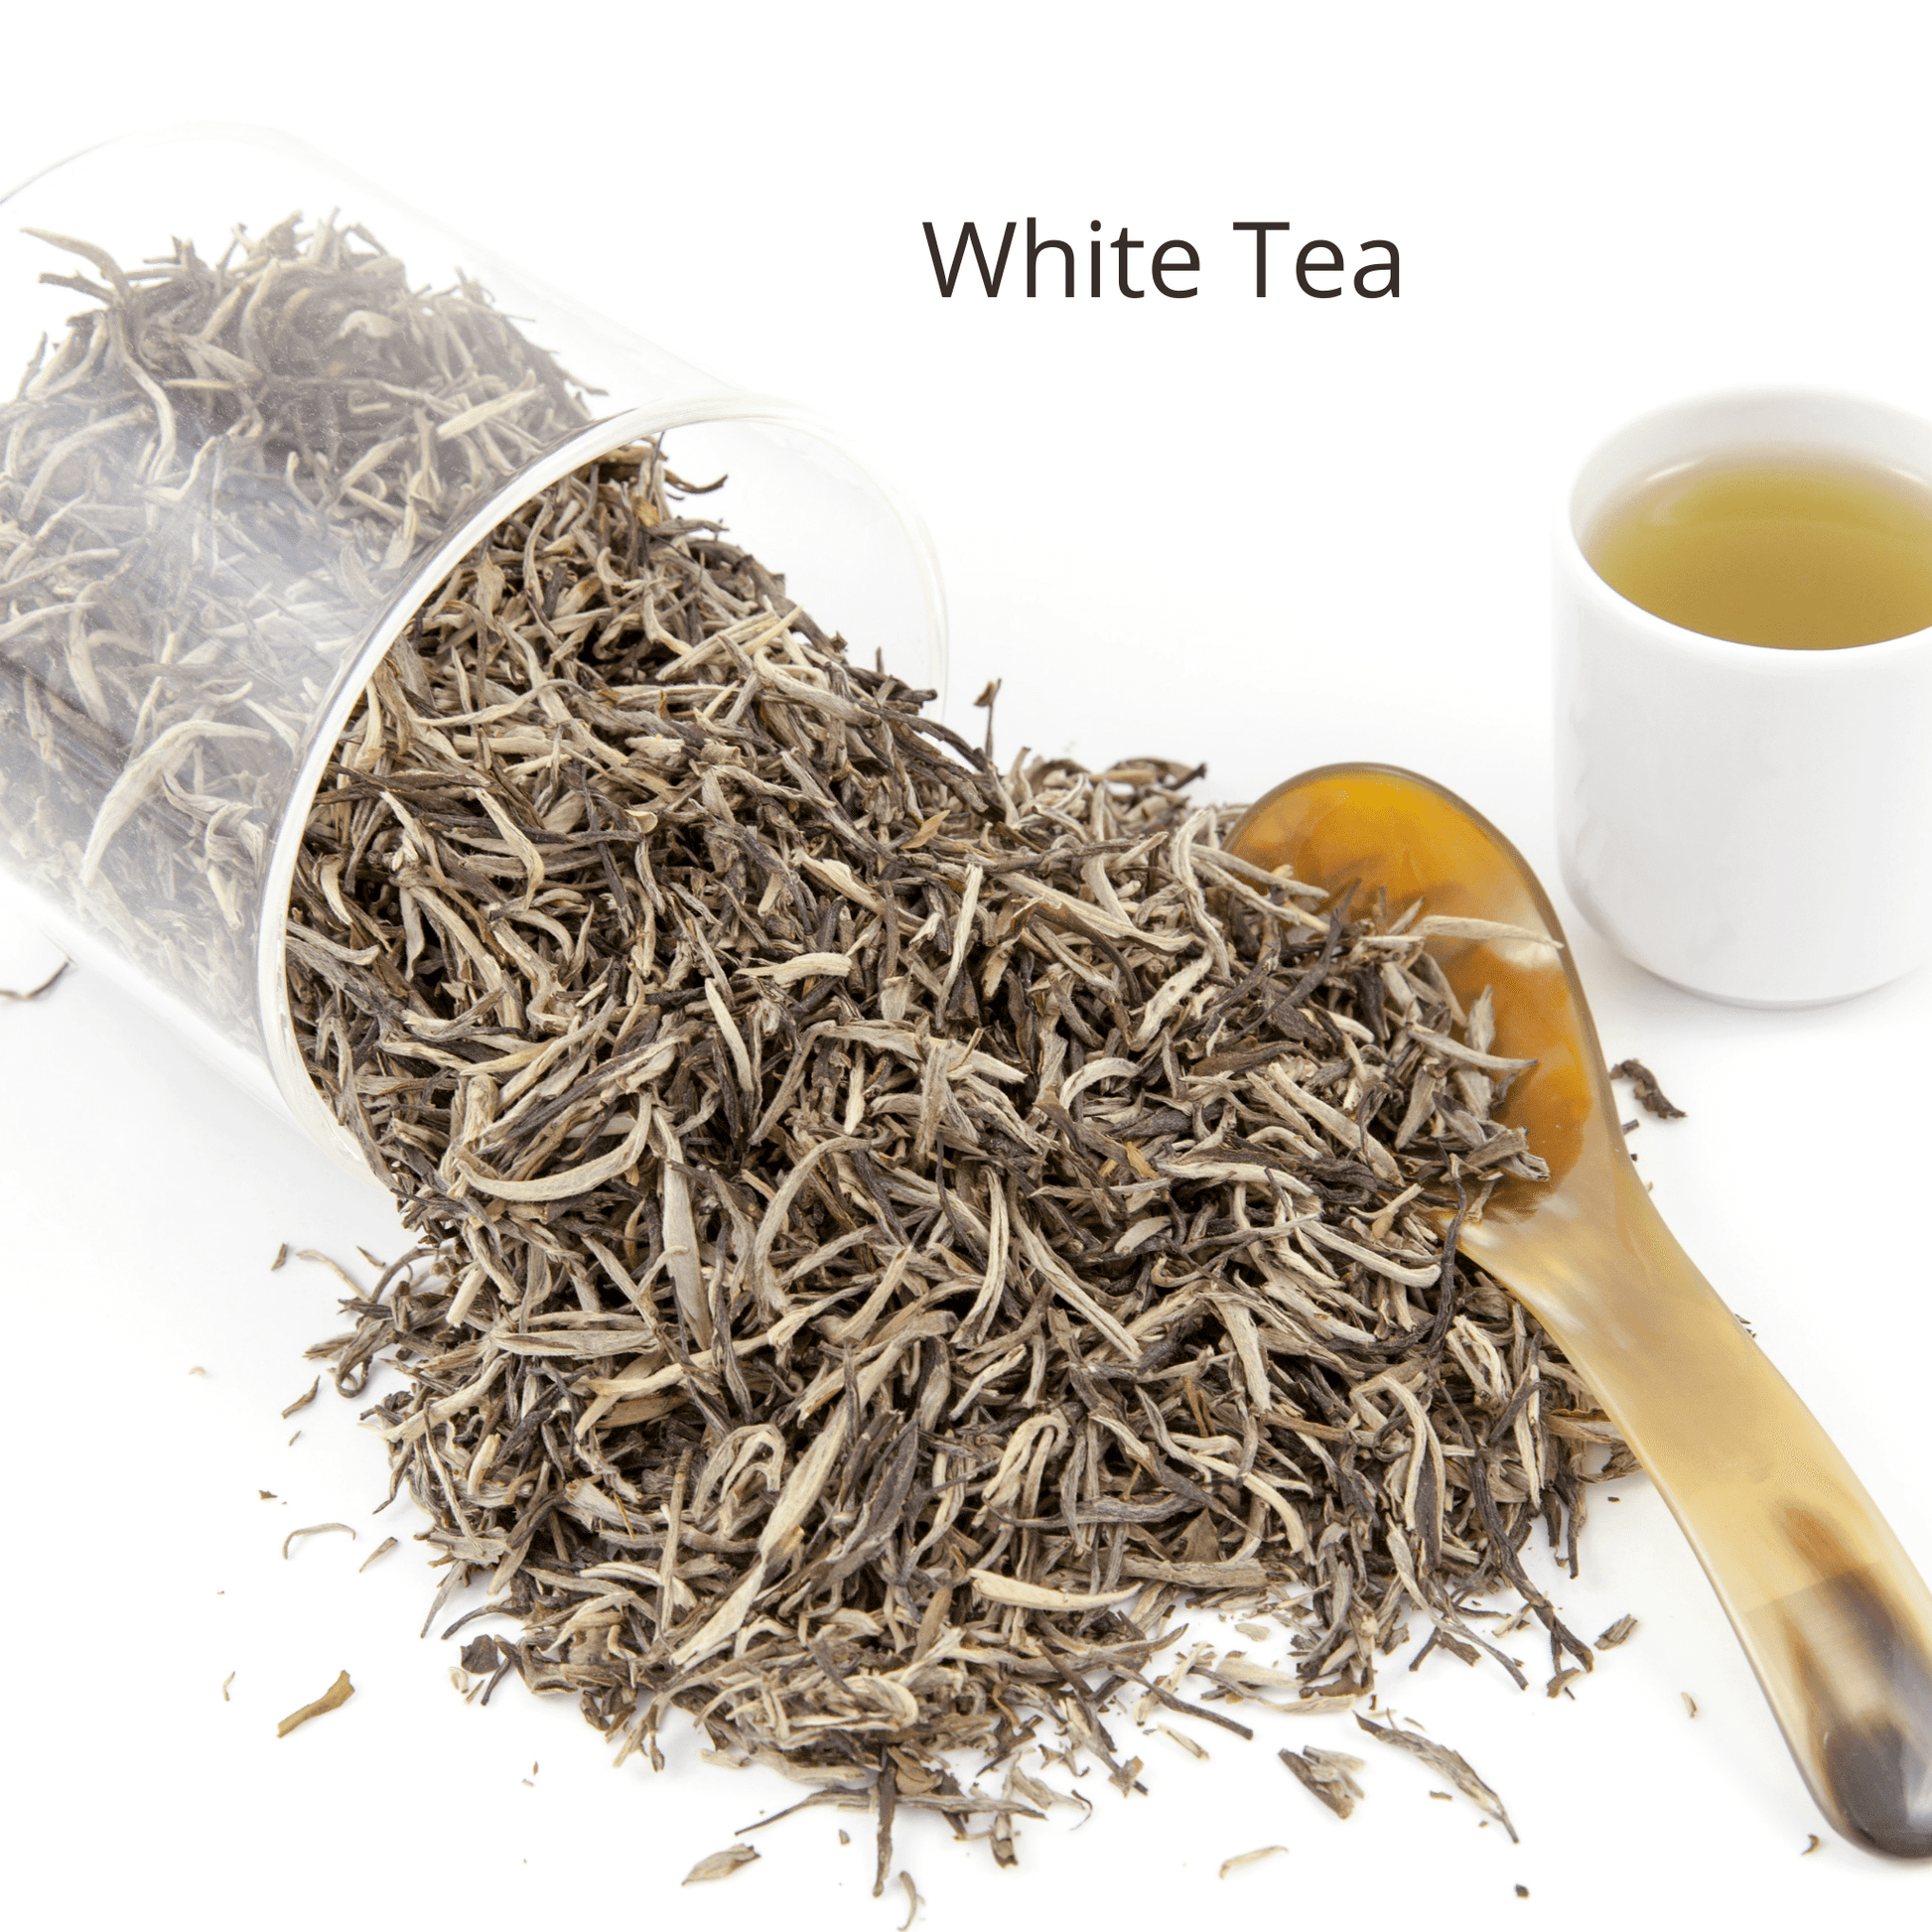 Be Green Bath and Body Toners Pomegranate + White Tea Toner contains white tea extract